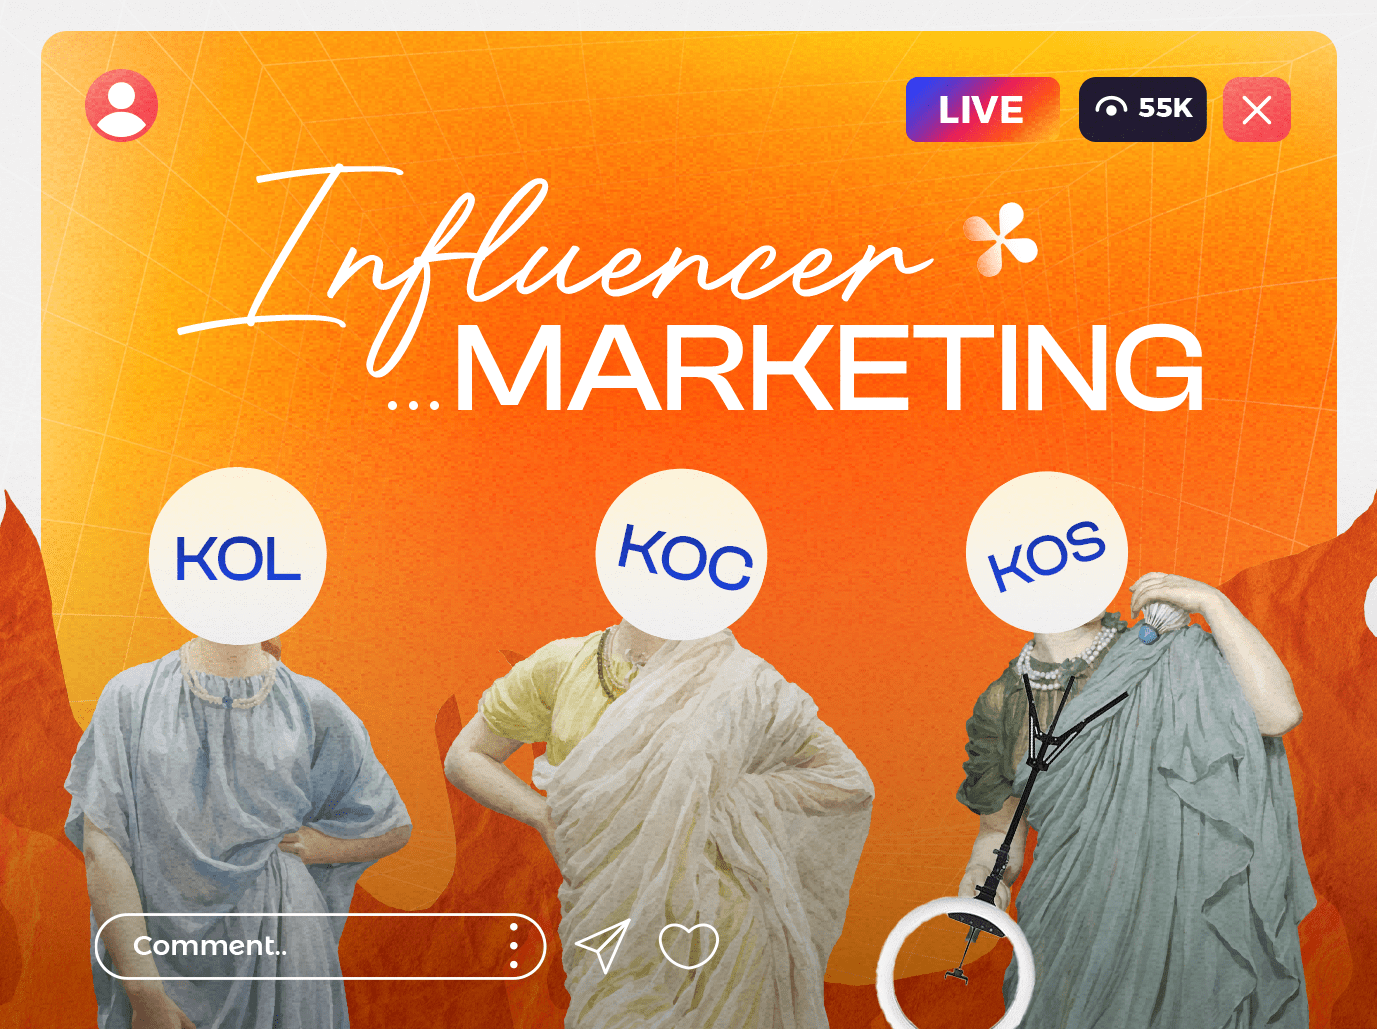 KOL, KOC, KOS: The Explosion of Influencer Marketing